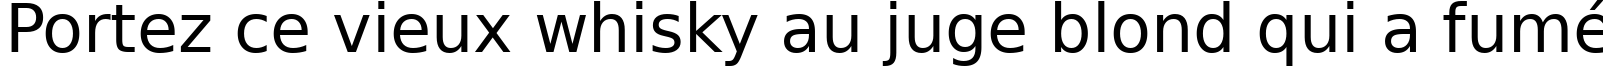 Пример написания шрифтом ae_Nice текста на французском